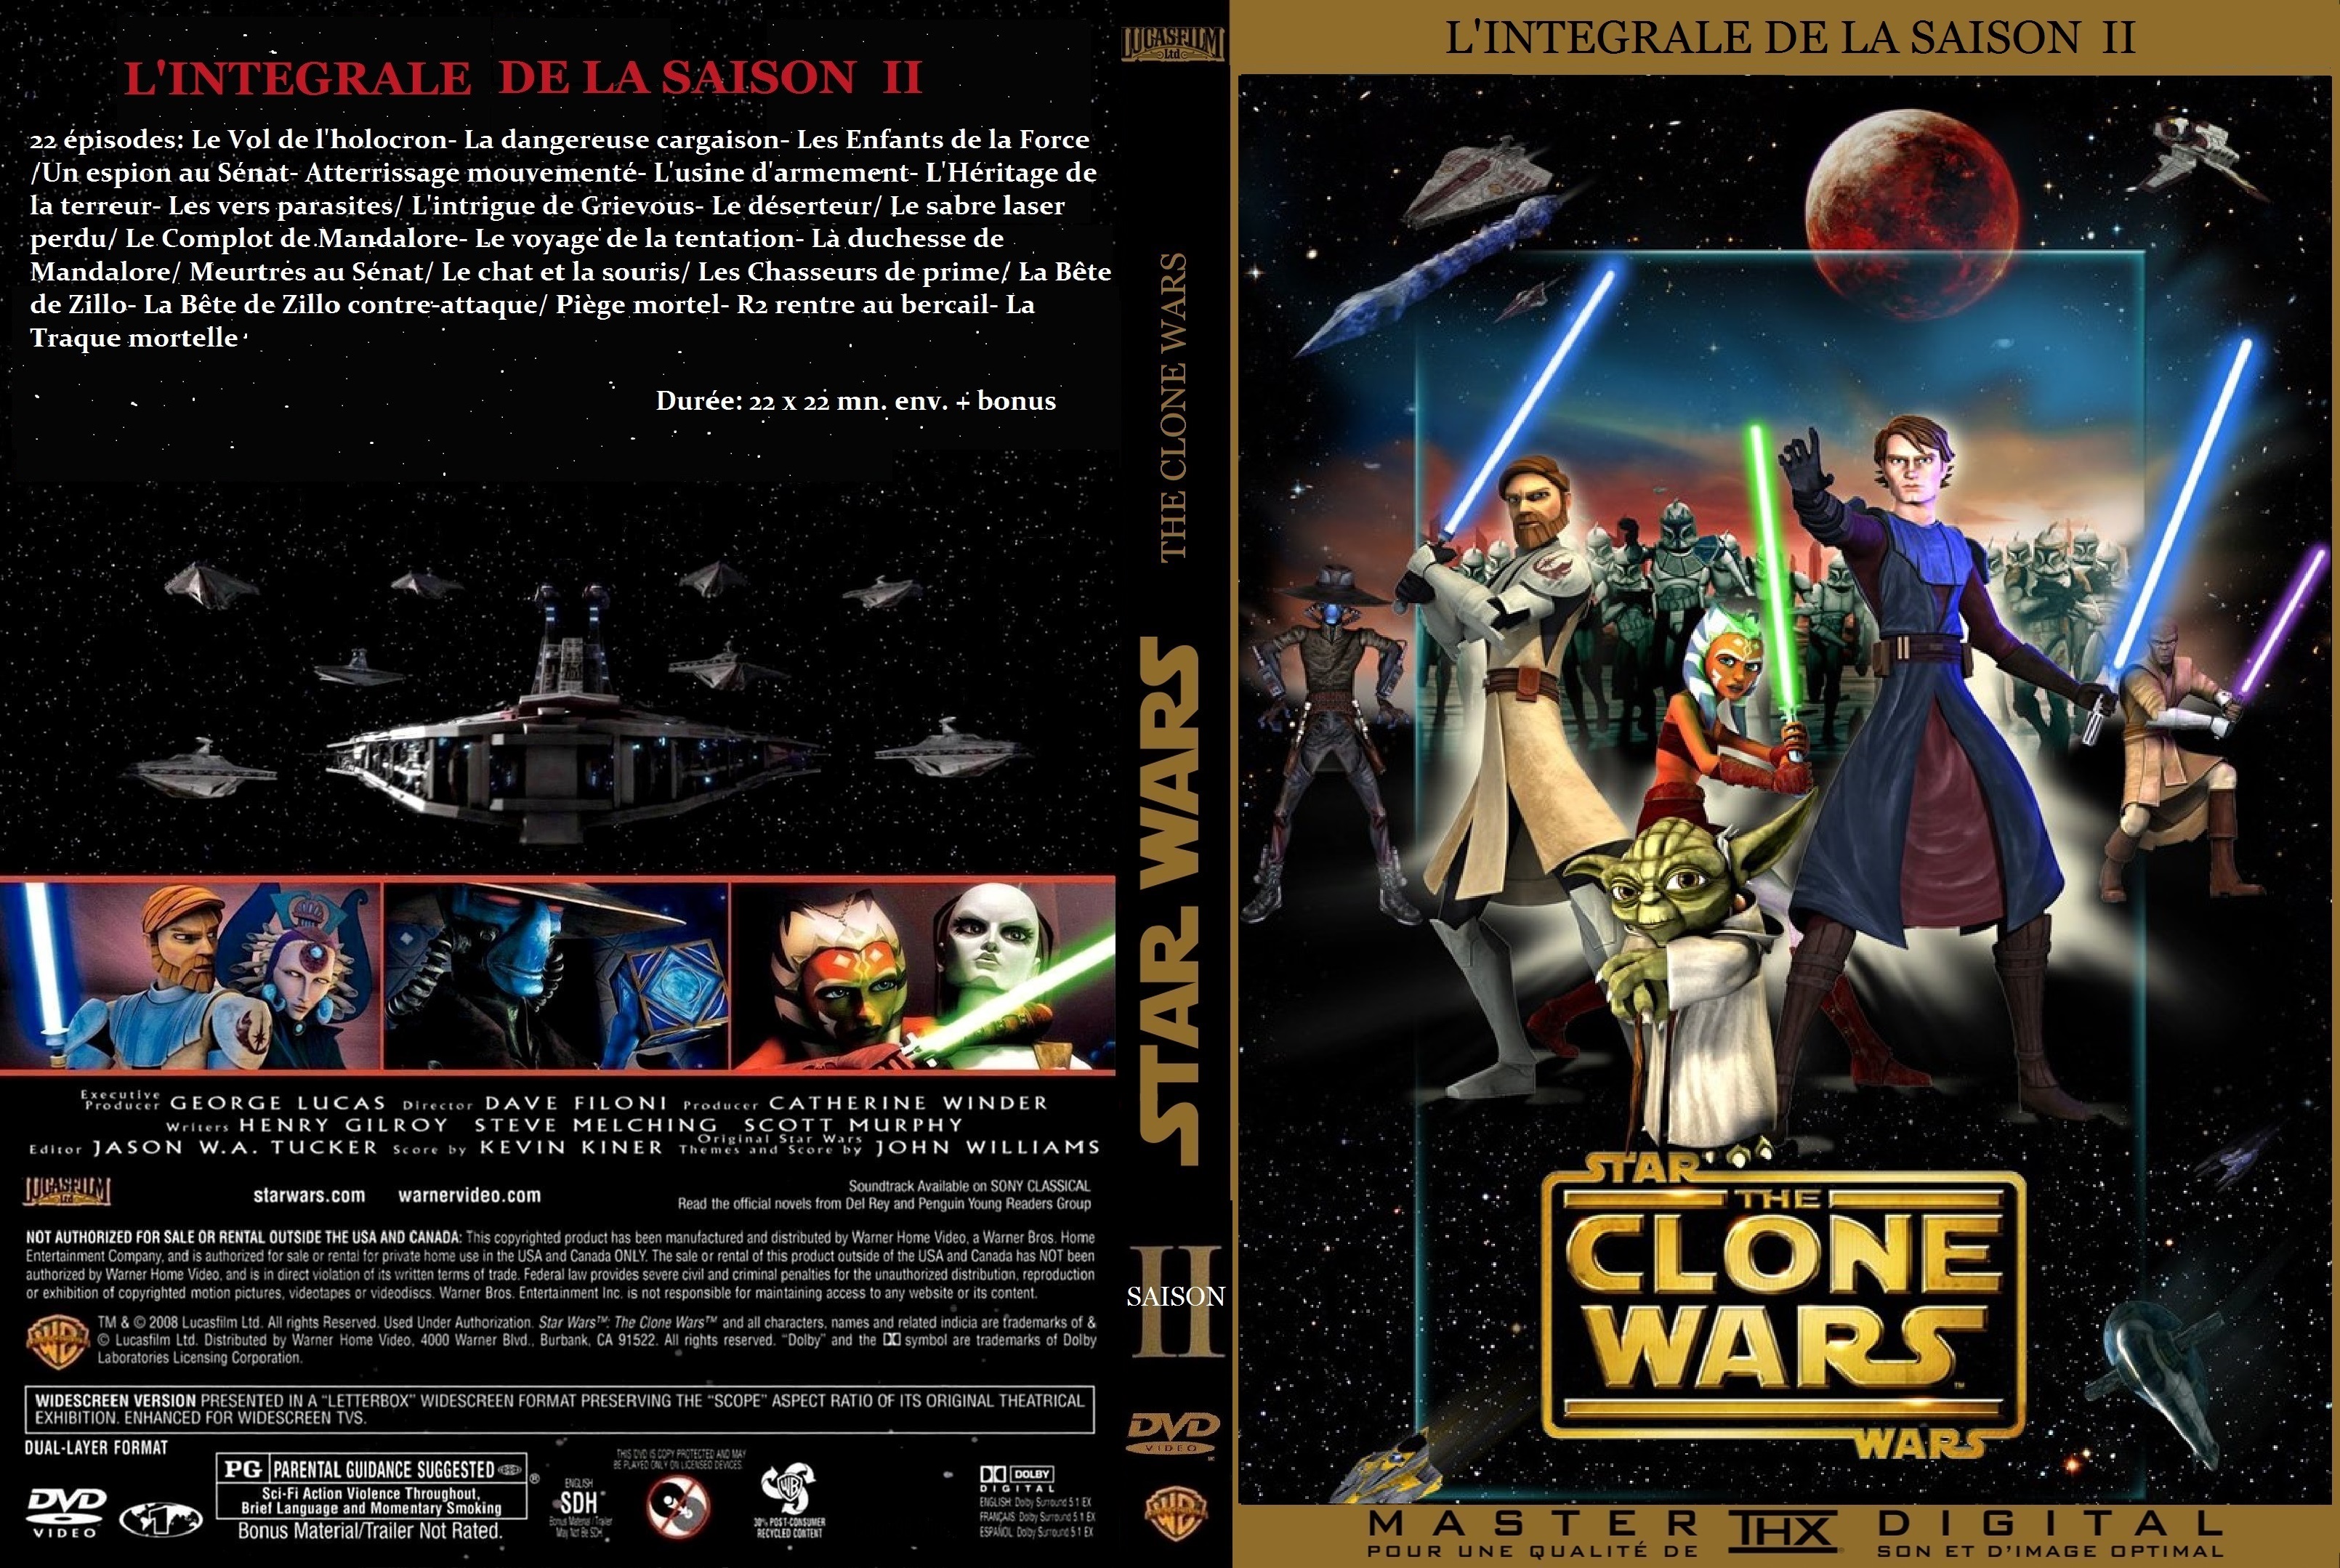 Jaquette DVD Star Wars The Clone Wars Saison 2 custom